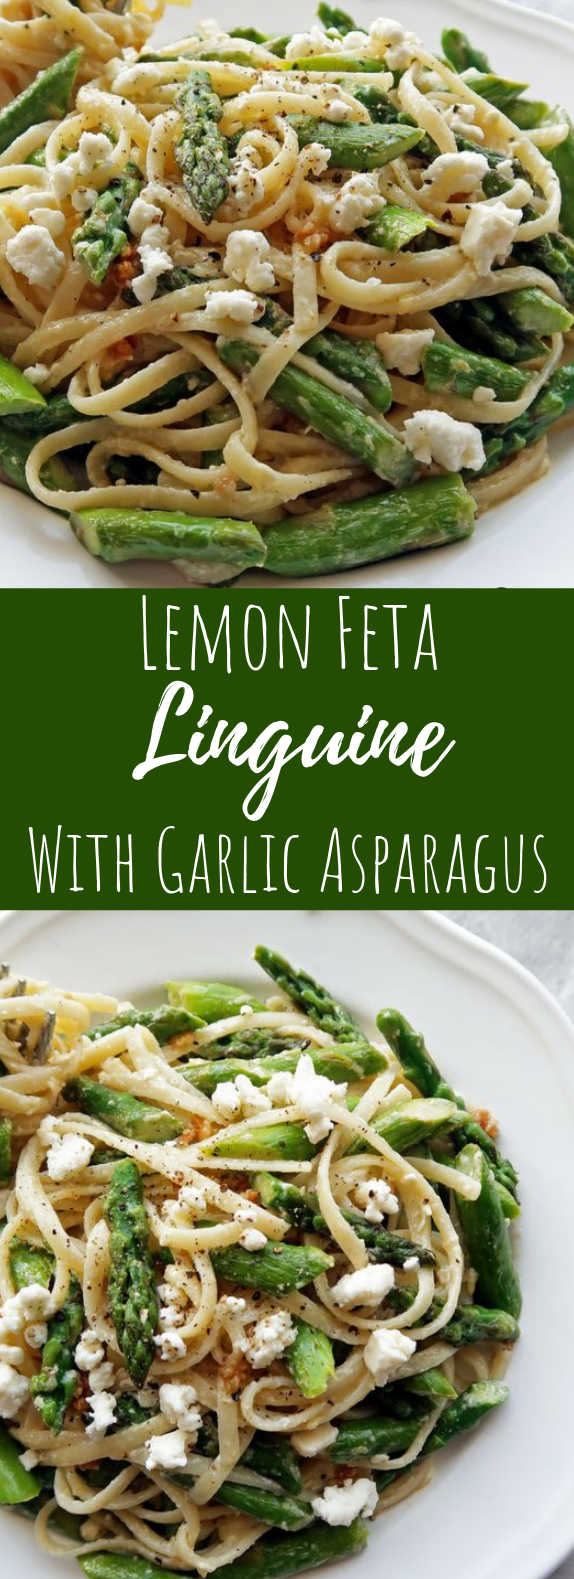 Lemon Feta Linguine with Garlic Asparagus #pasta #vegetarian